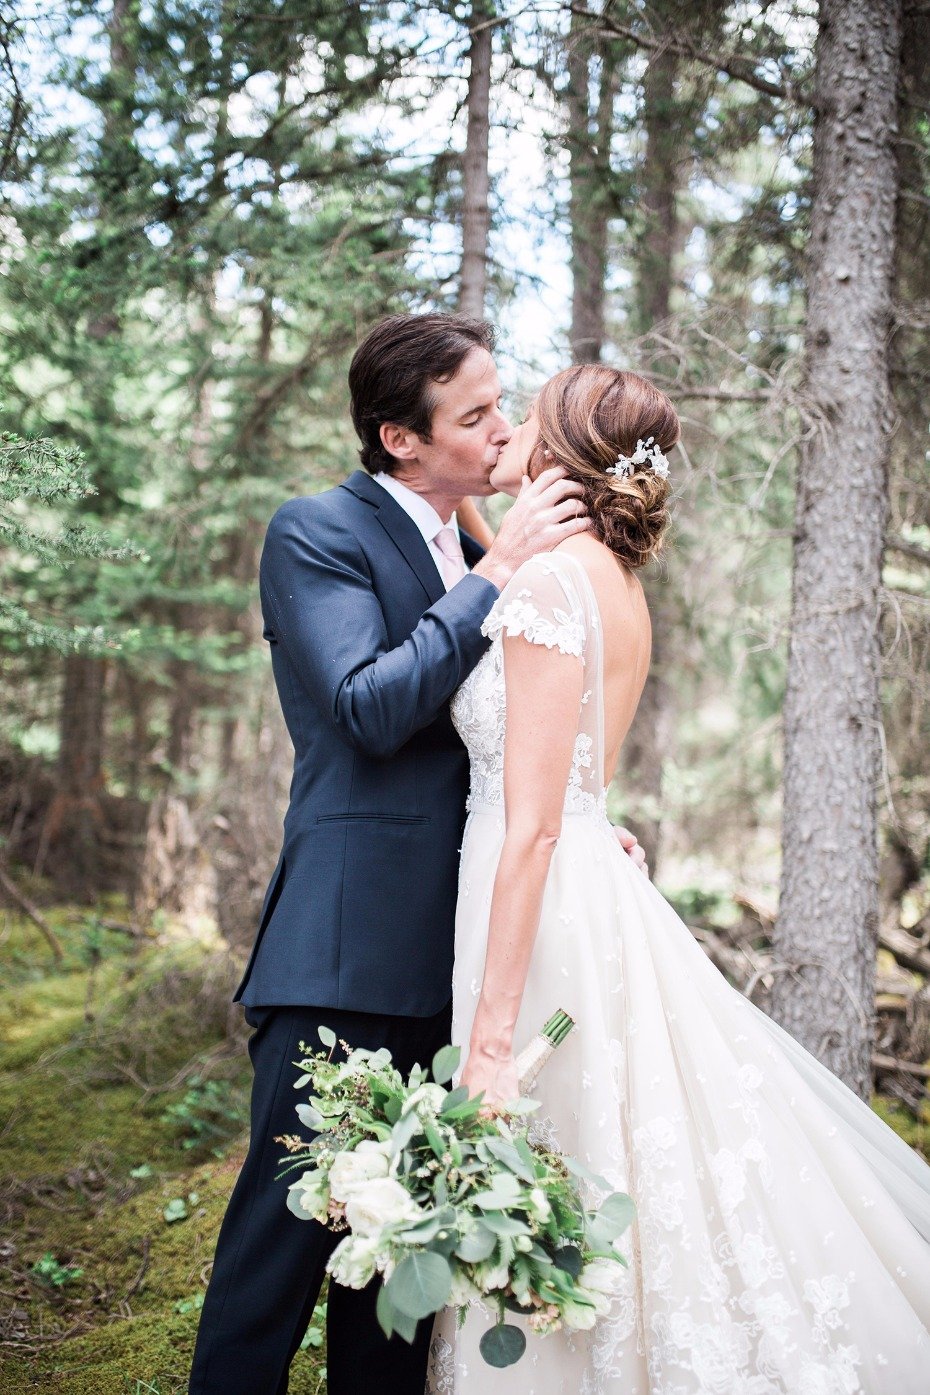 Beautiful Canadian Rockies wedding